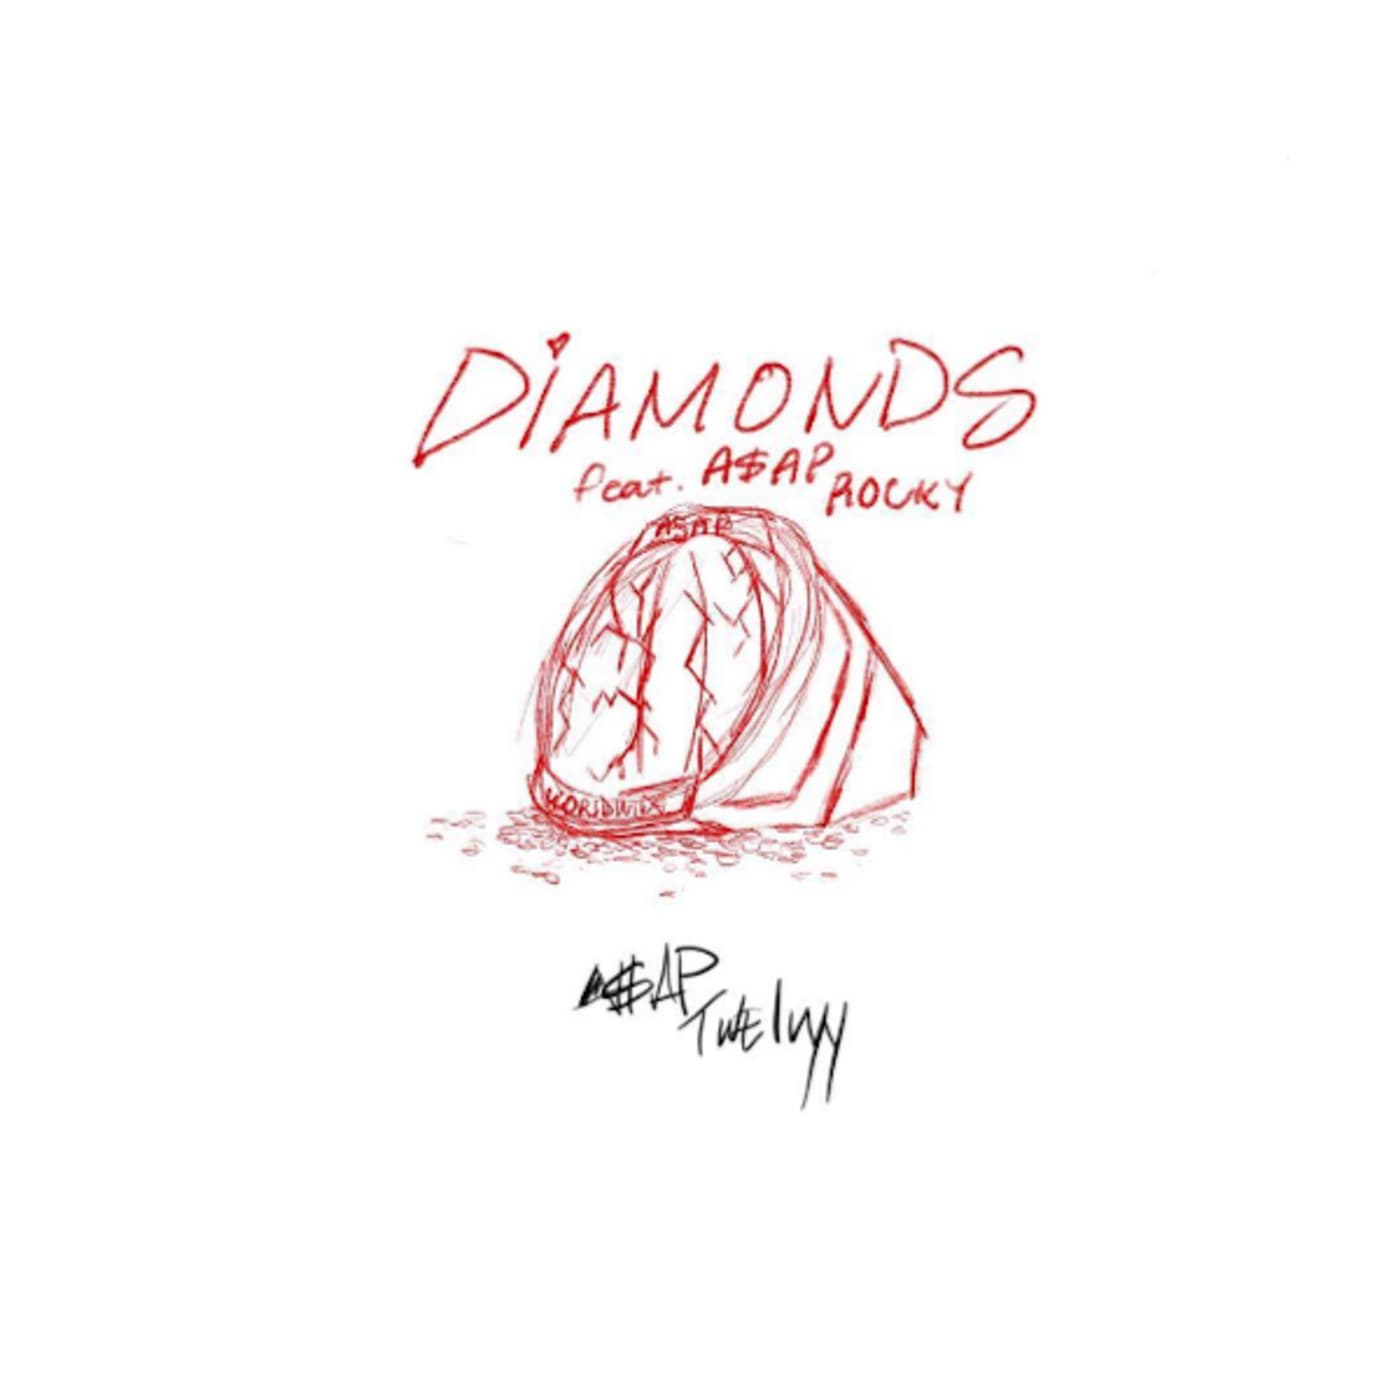 ASAP Twelvyy "Diamonds" f/ ASAP Rocky